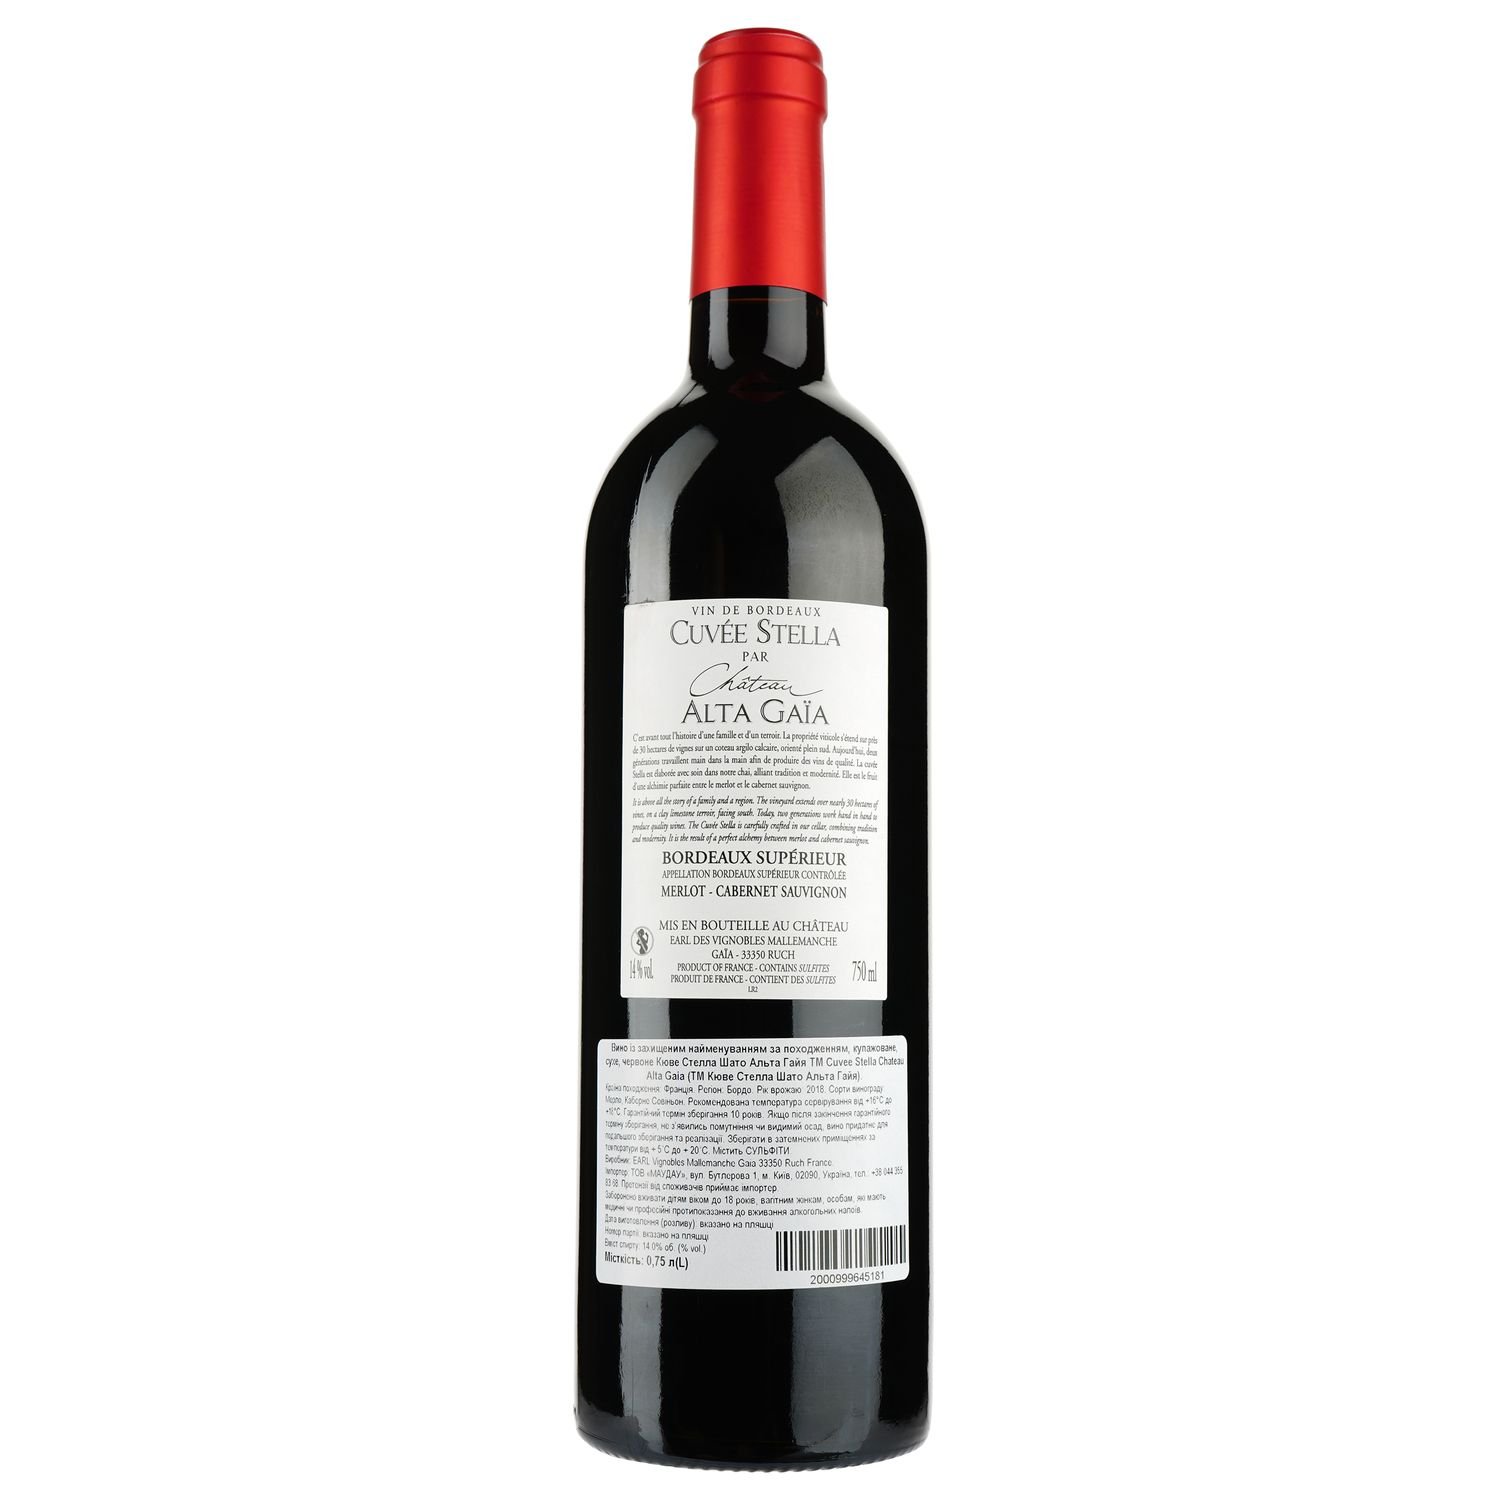 Вино Cuvee Stella Chateau Alta Gaia AOP Bordeaux Superieur 2018, красное, сухое, 0,75 л - фото 2